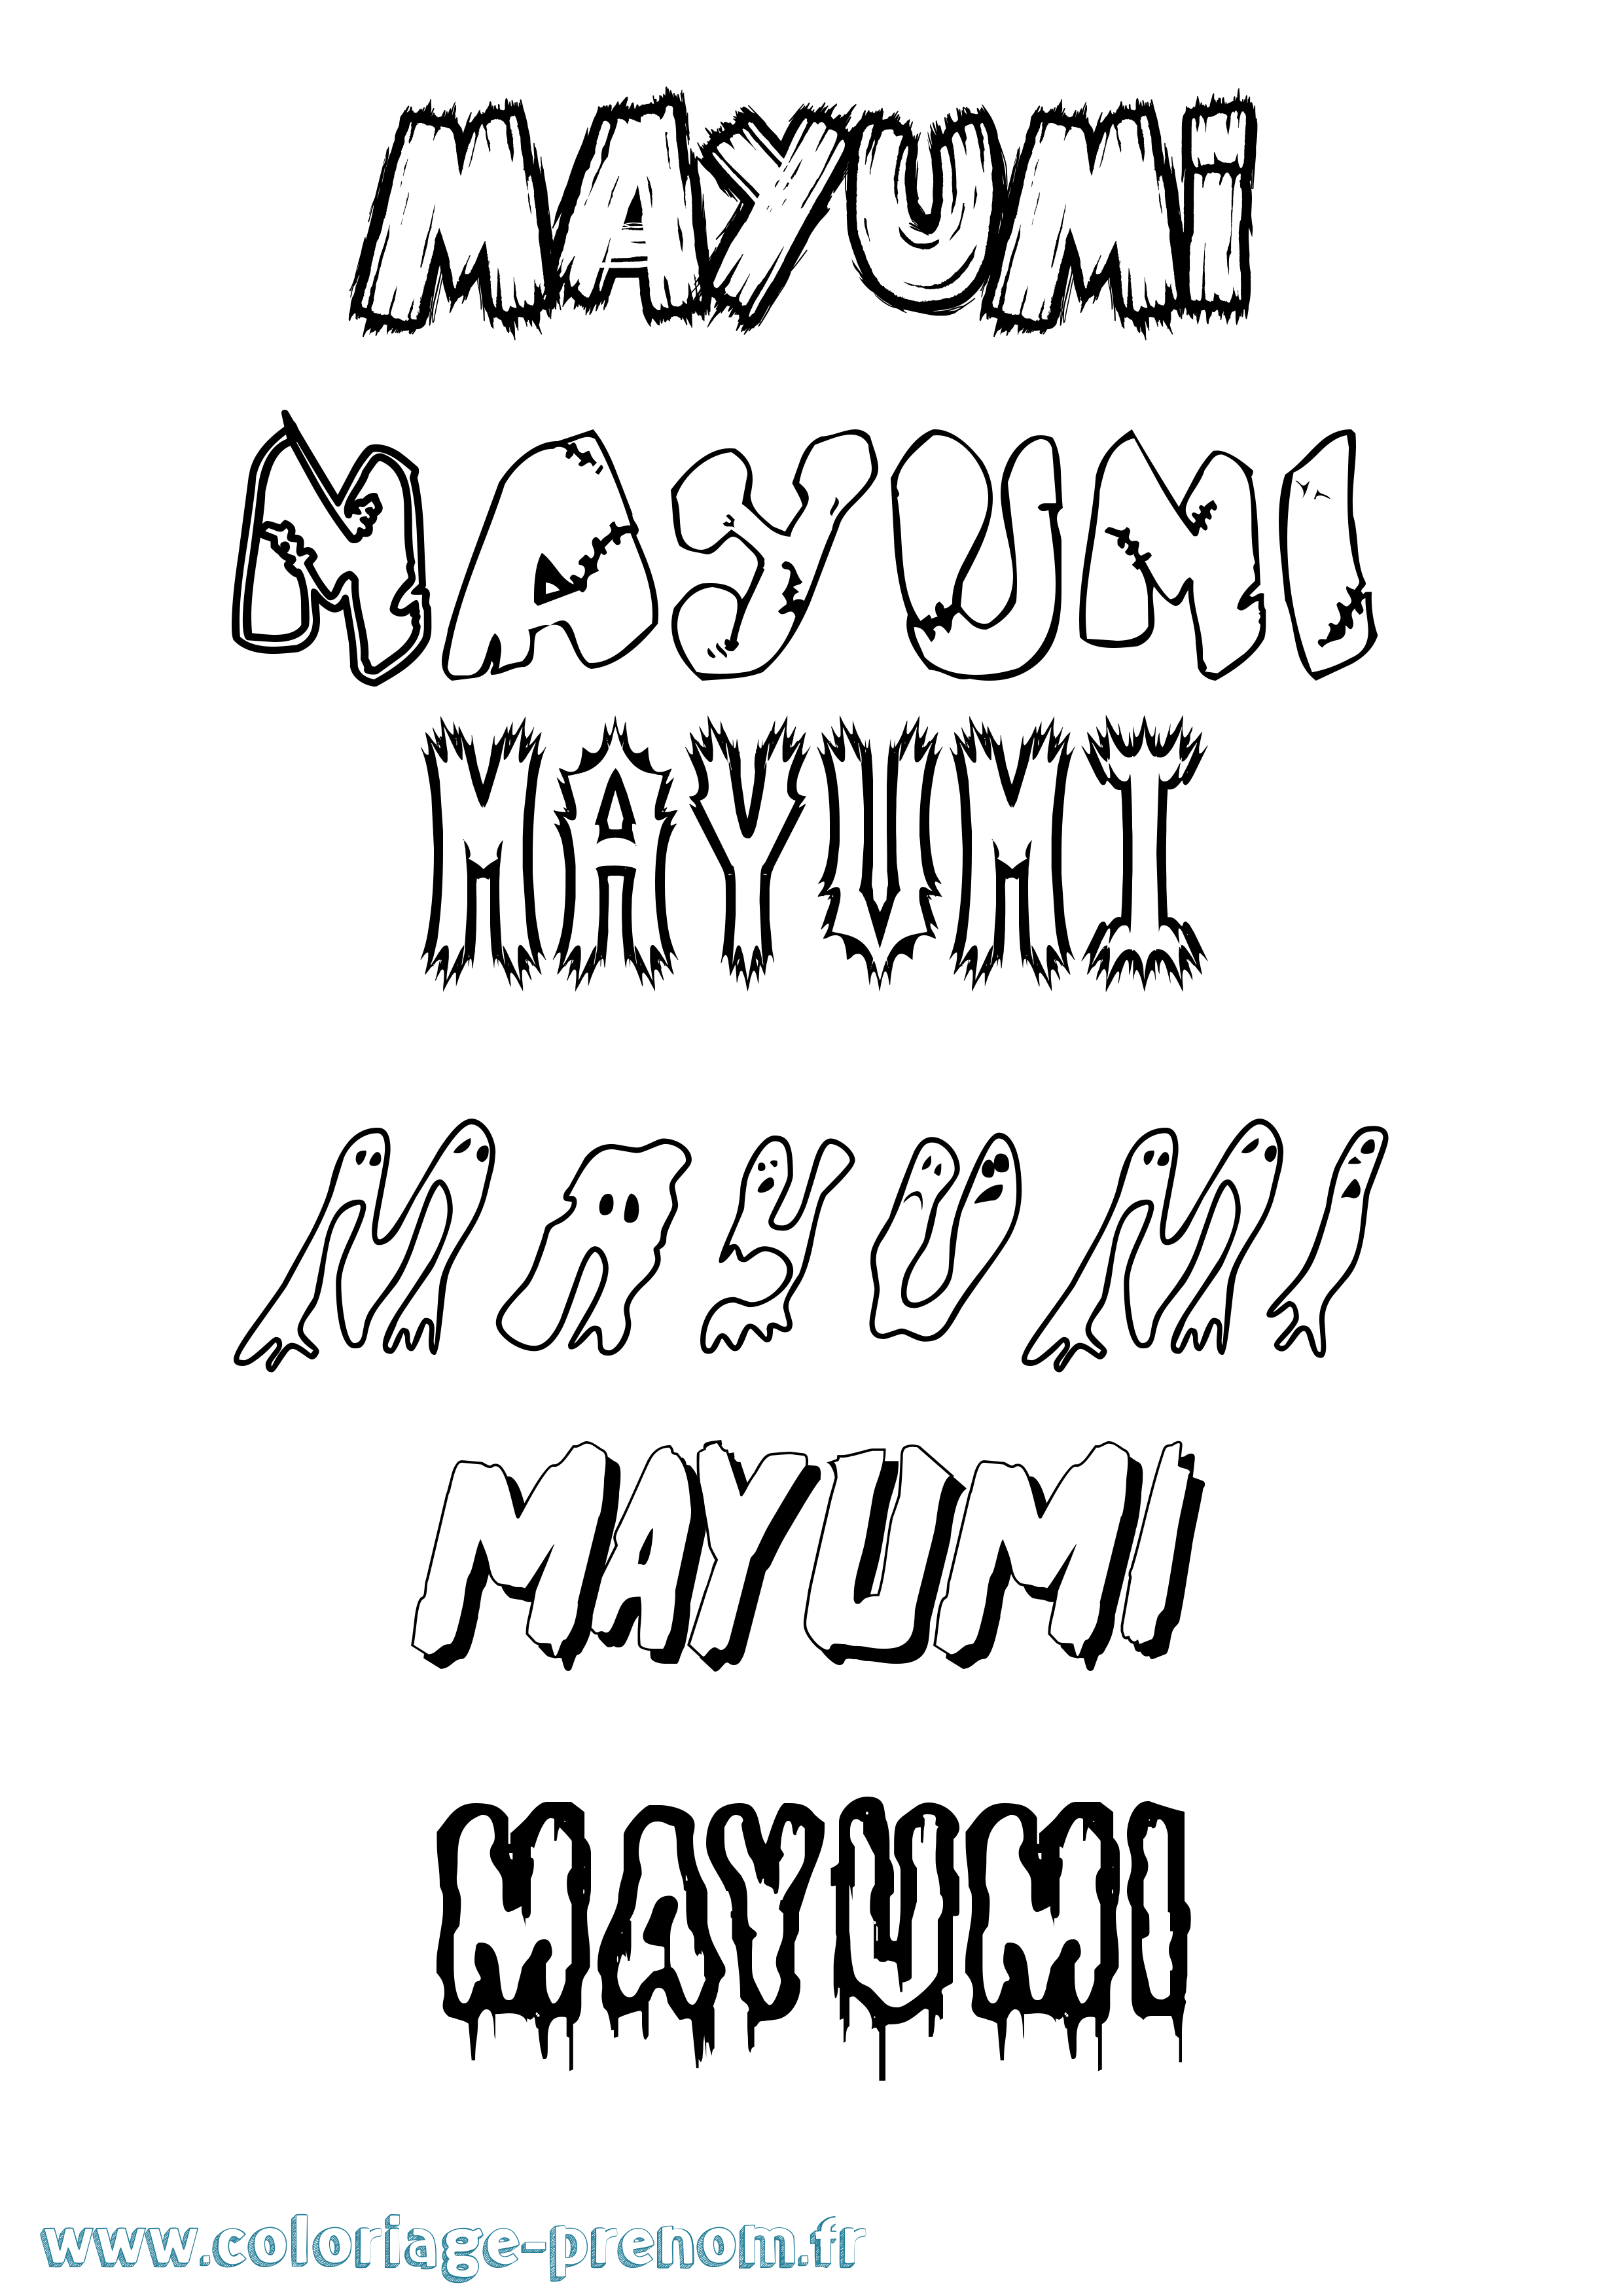 Coloriage prénom Mayumi Frisson